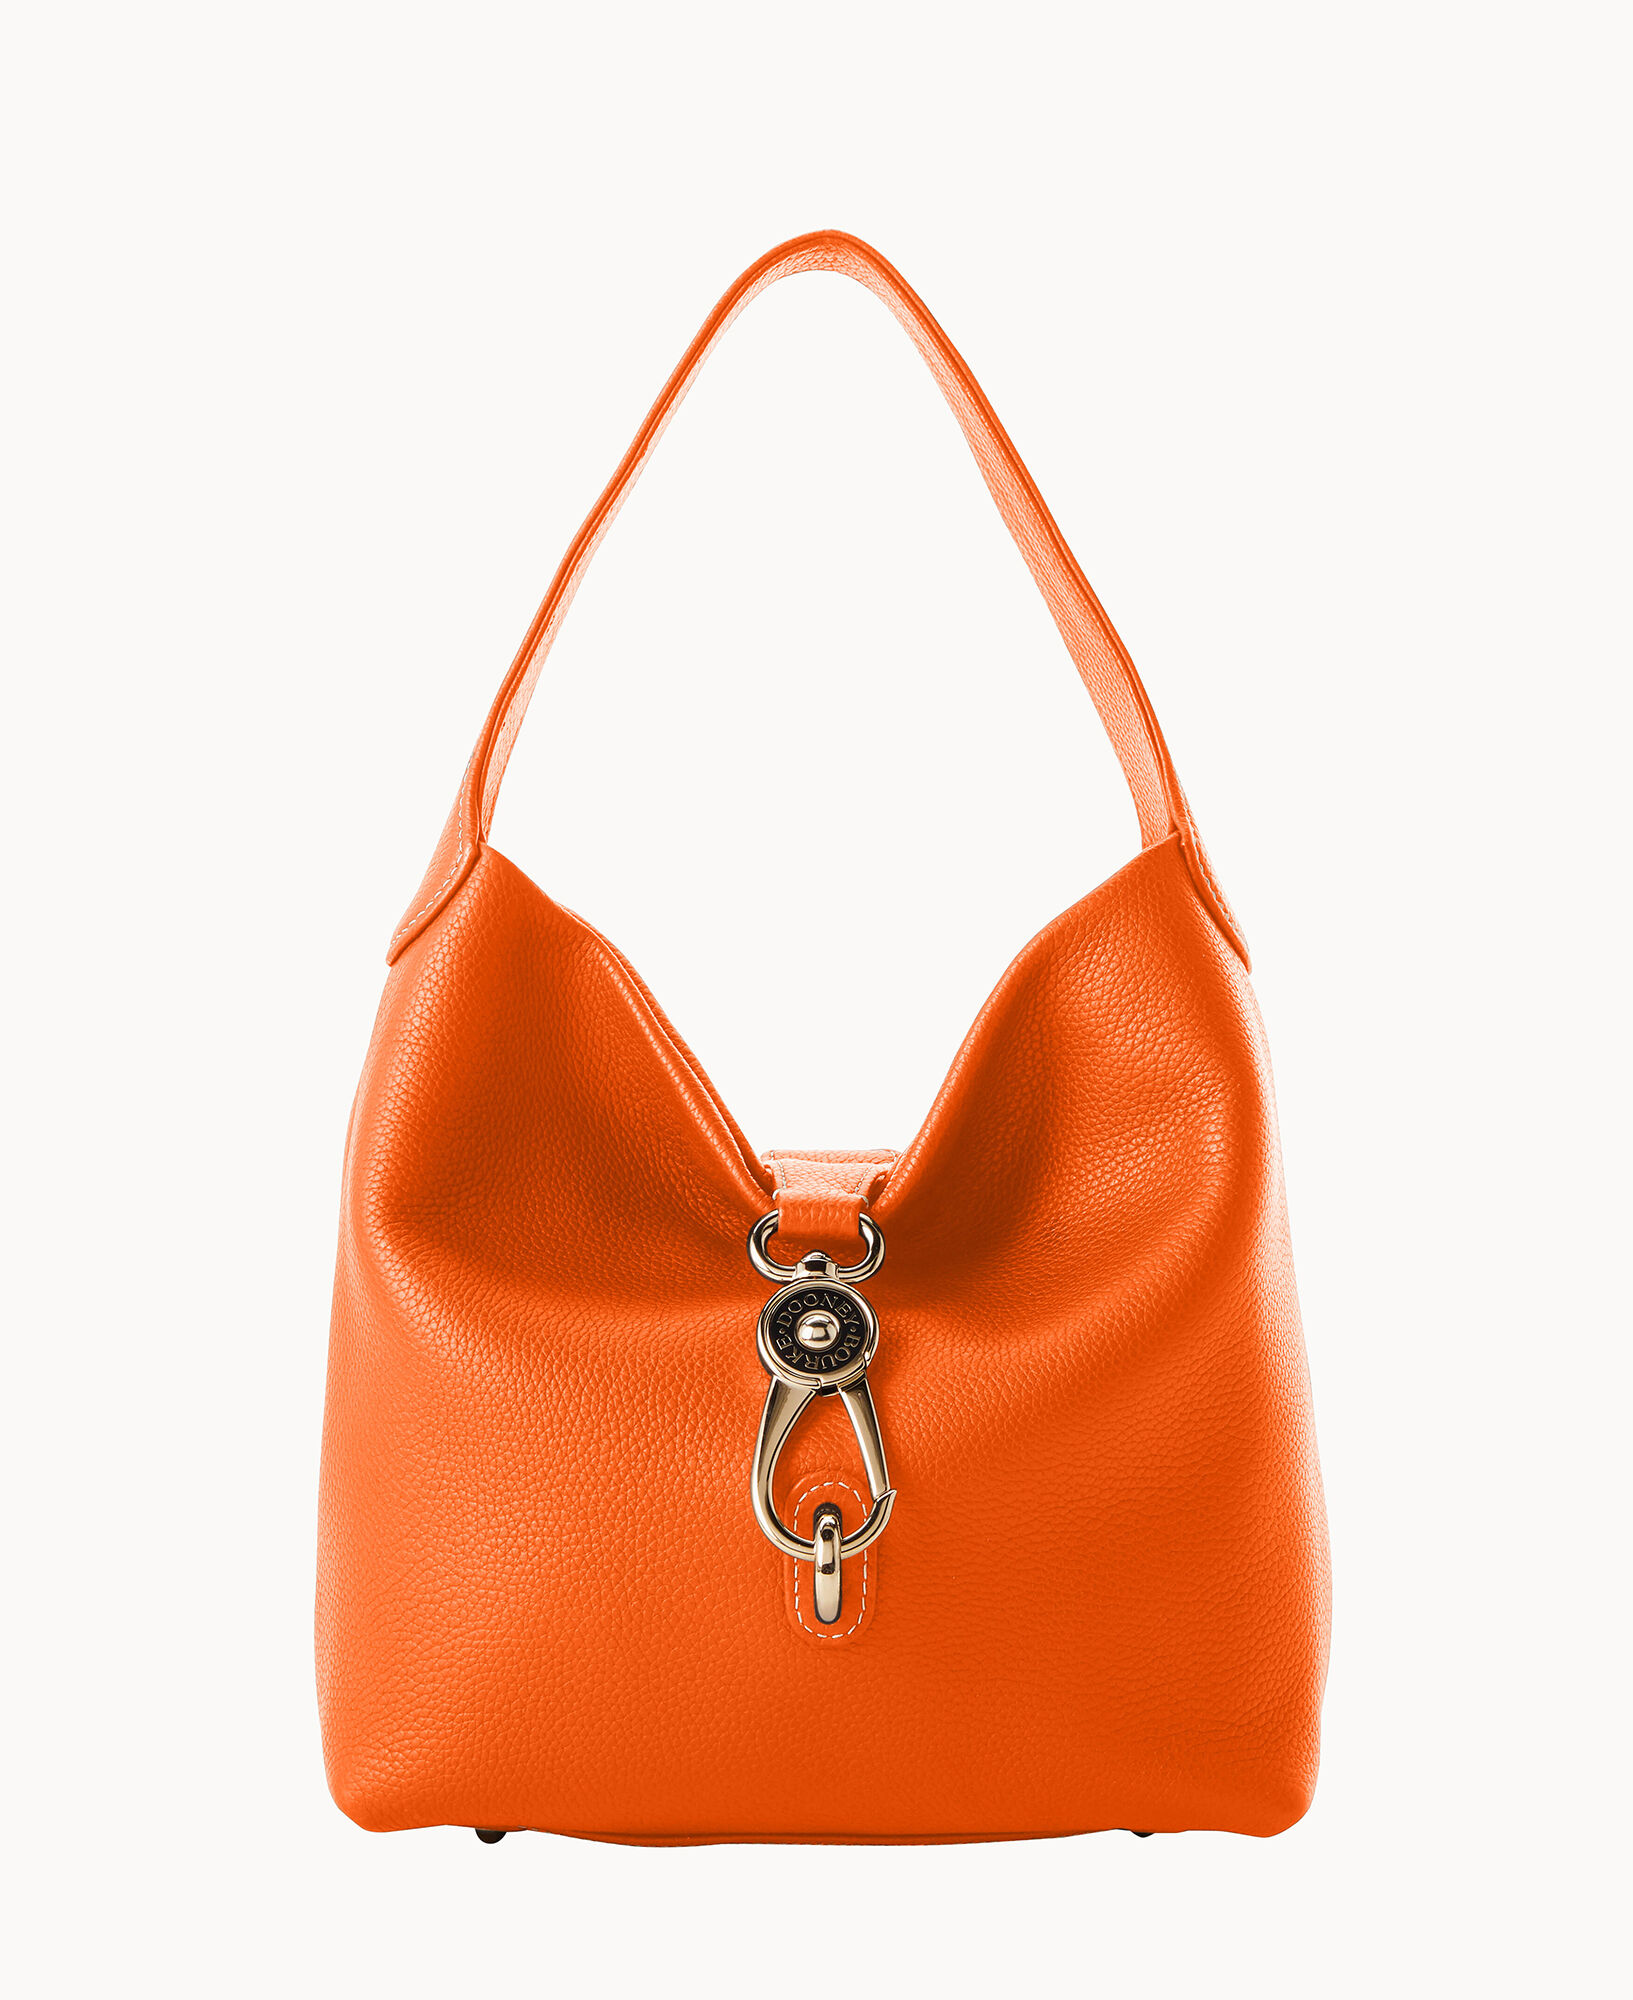  Dooney & Bourke Handbag, Pebble Grain Tote - Bark : Clothing,  Shoes & Jewelry